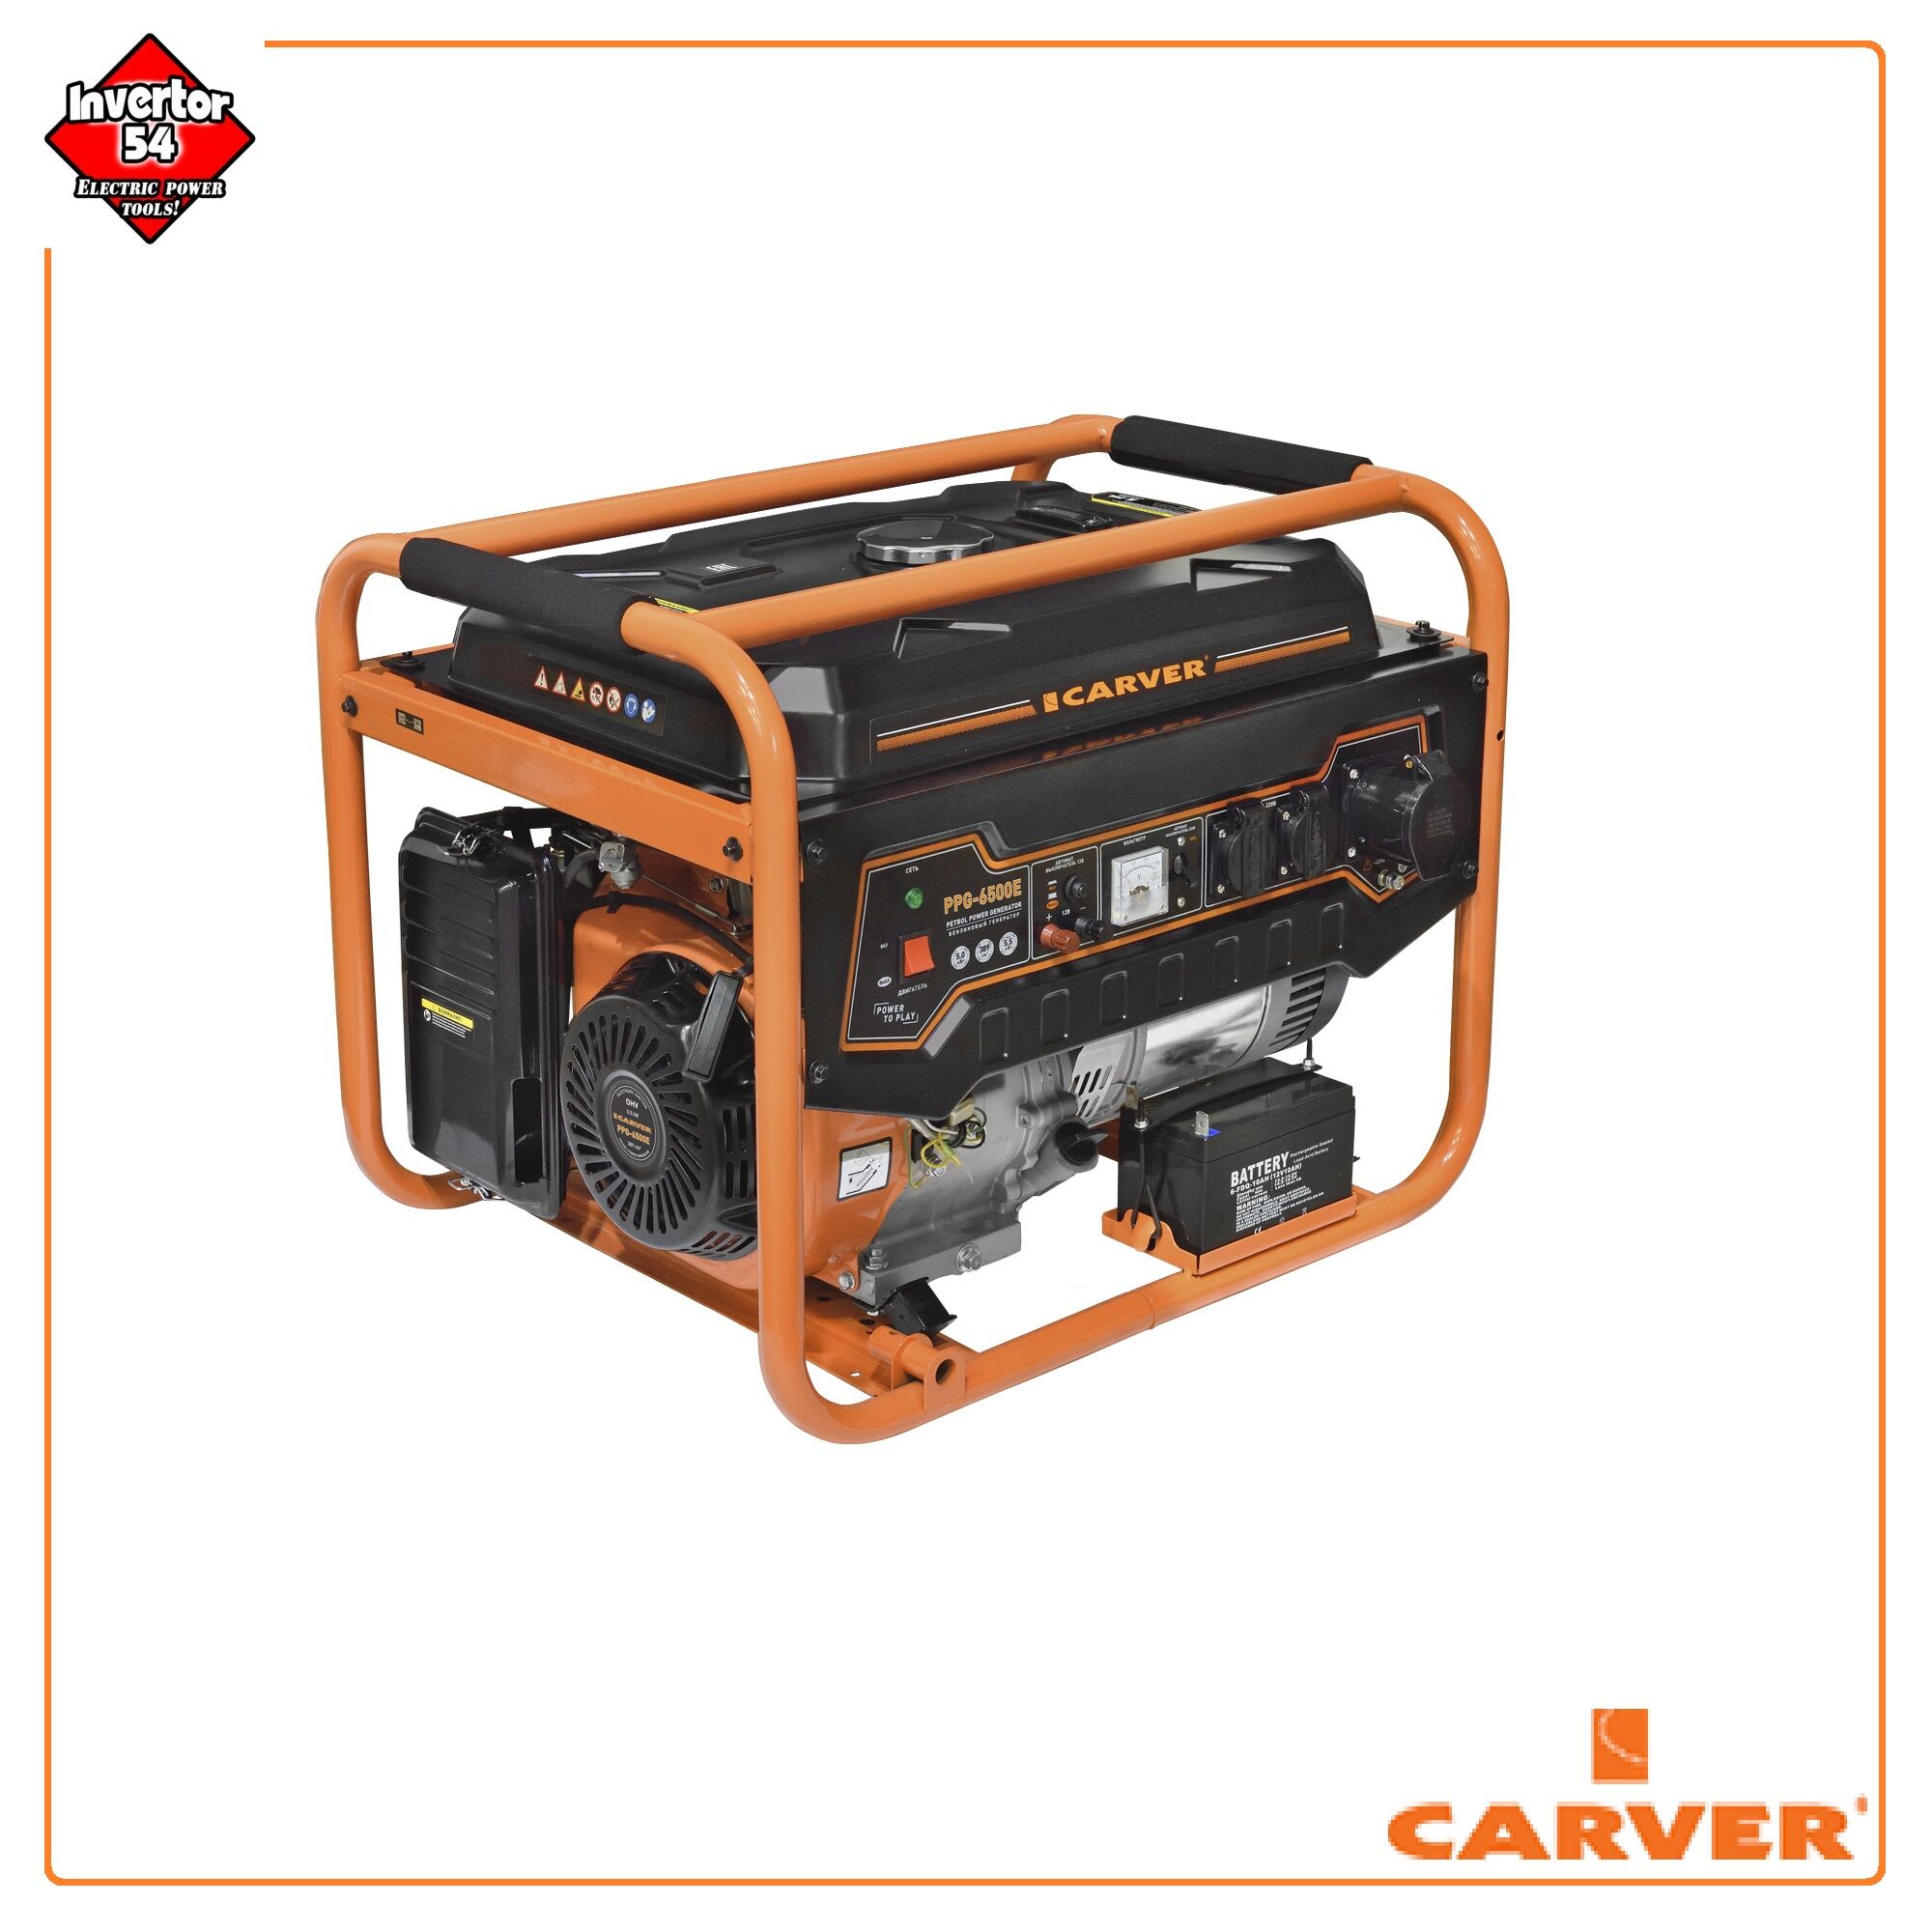 Бензогенератор Carver PPG-6500E